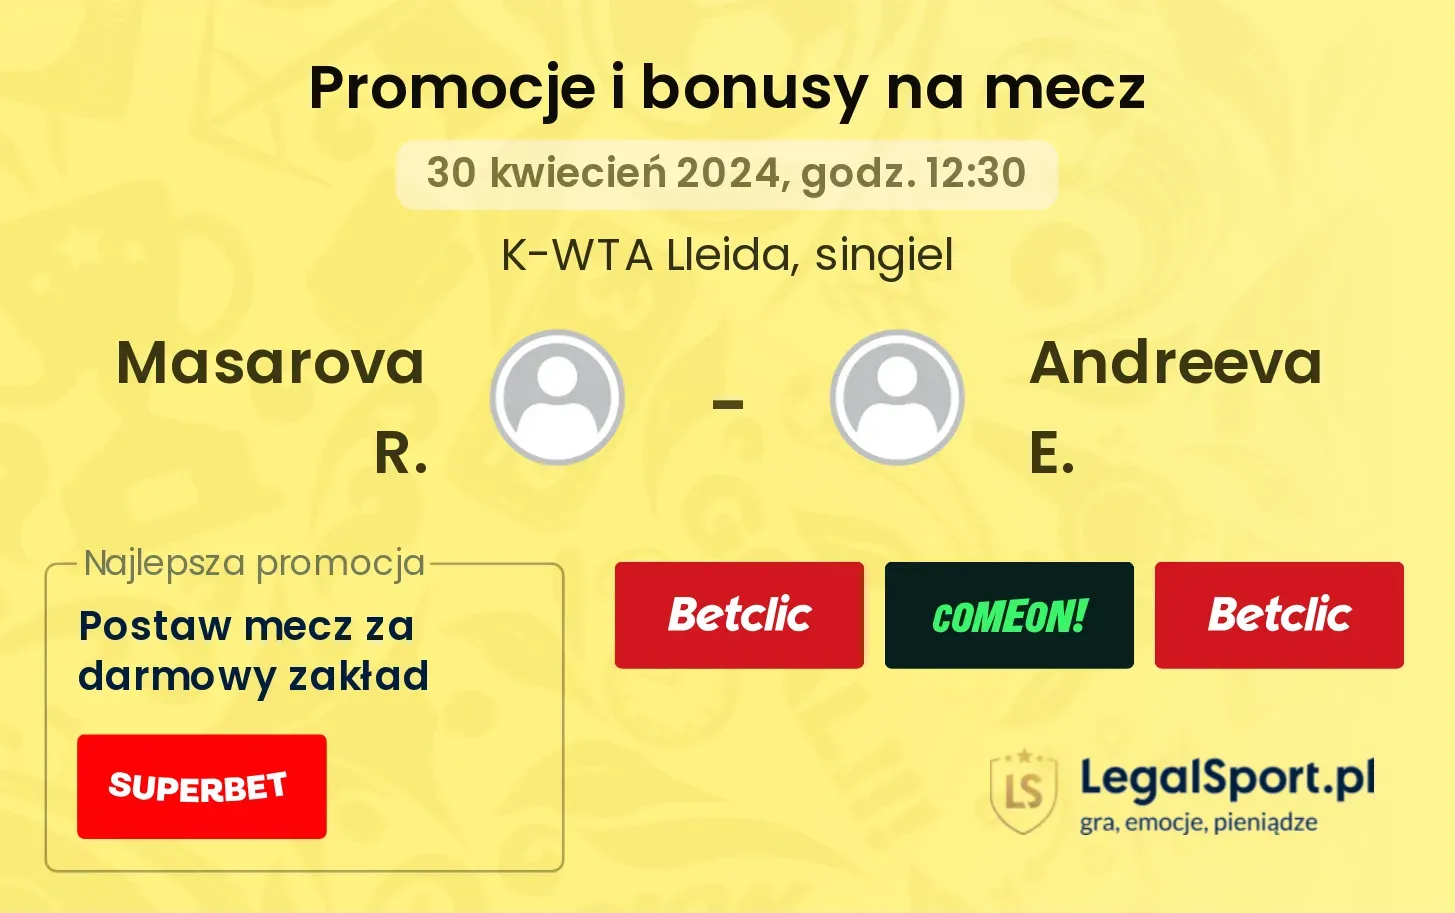 Masarova R. - Andreeva E. promocje bonusy na mecz